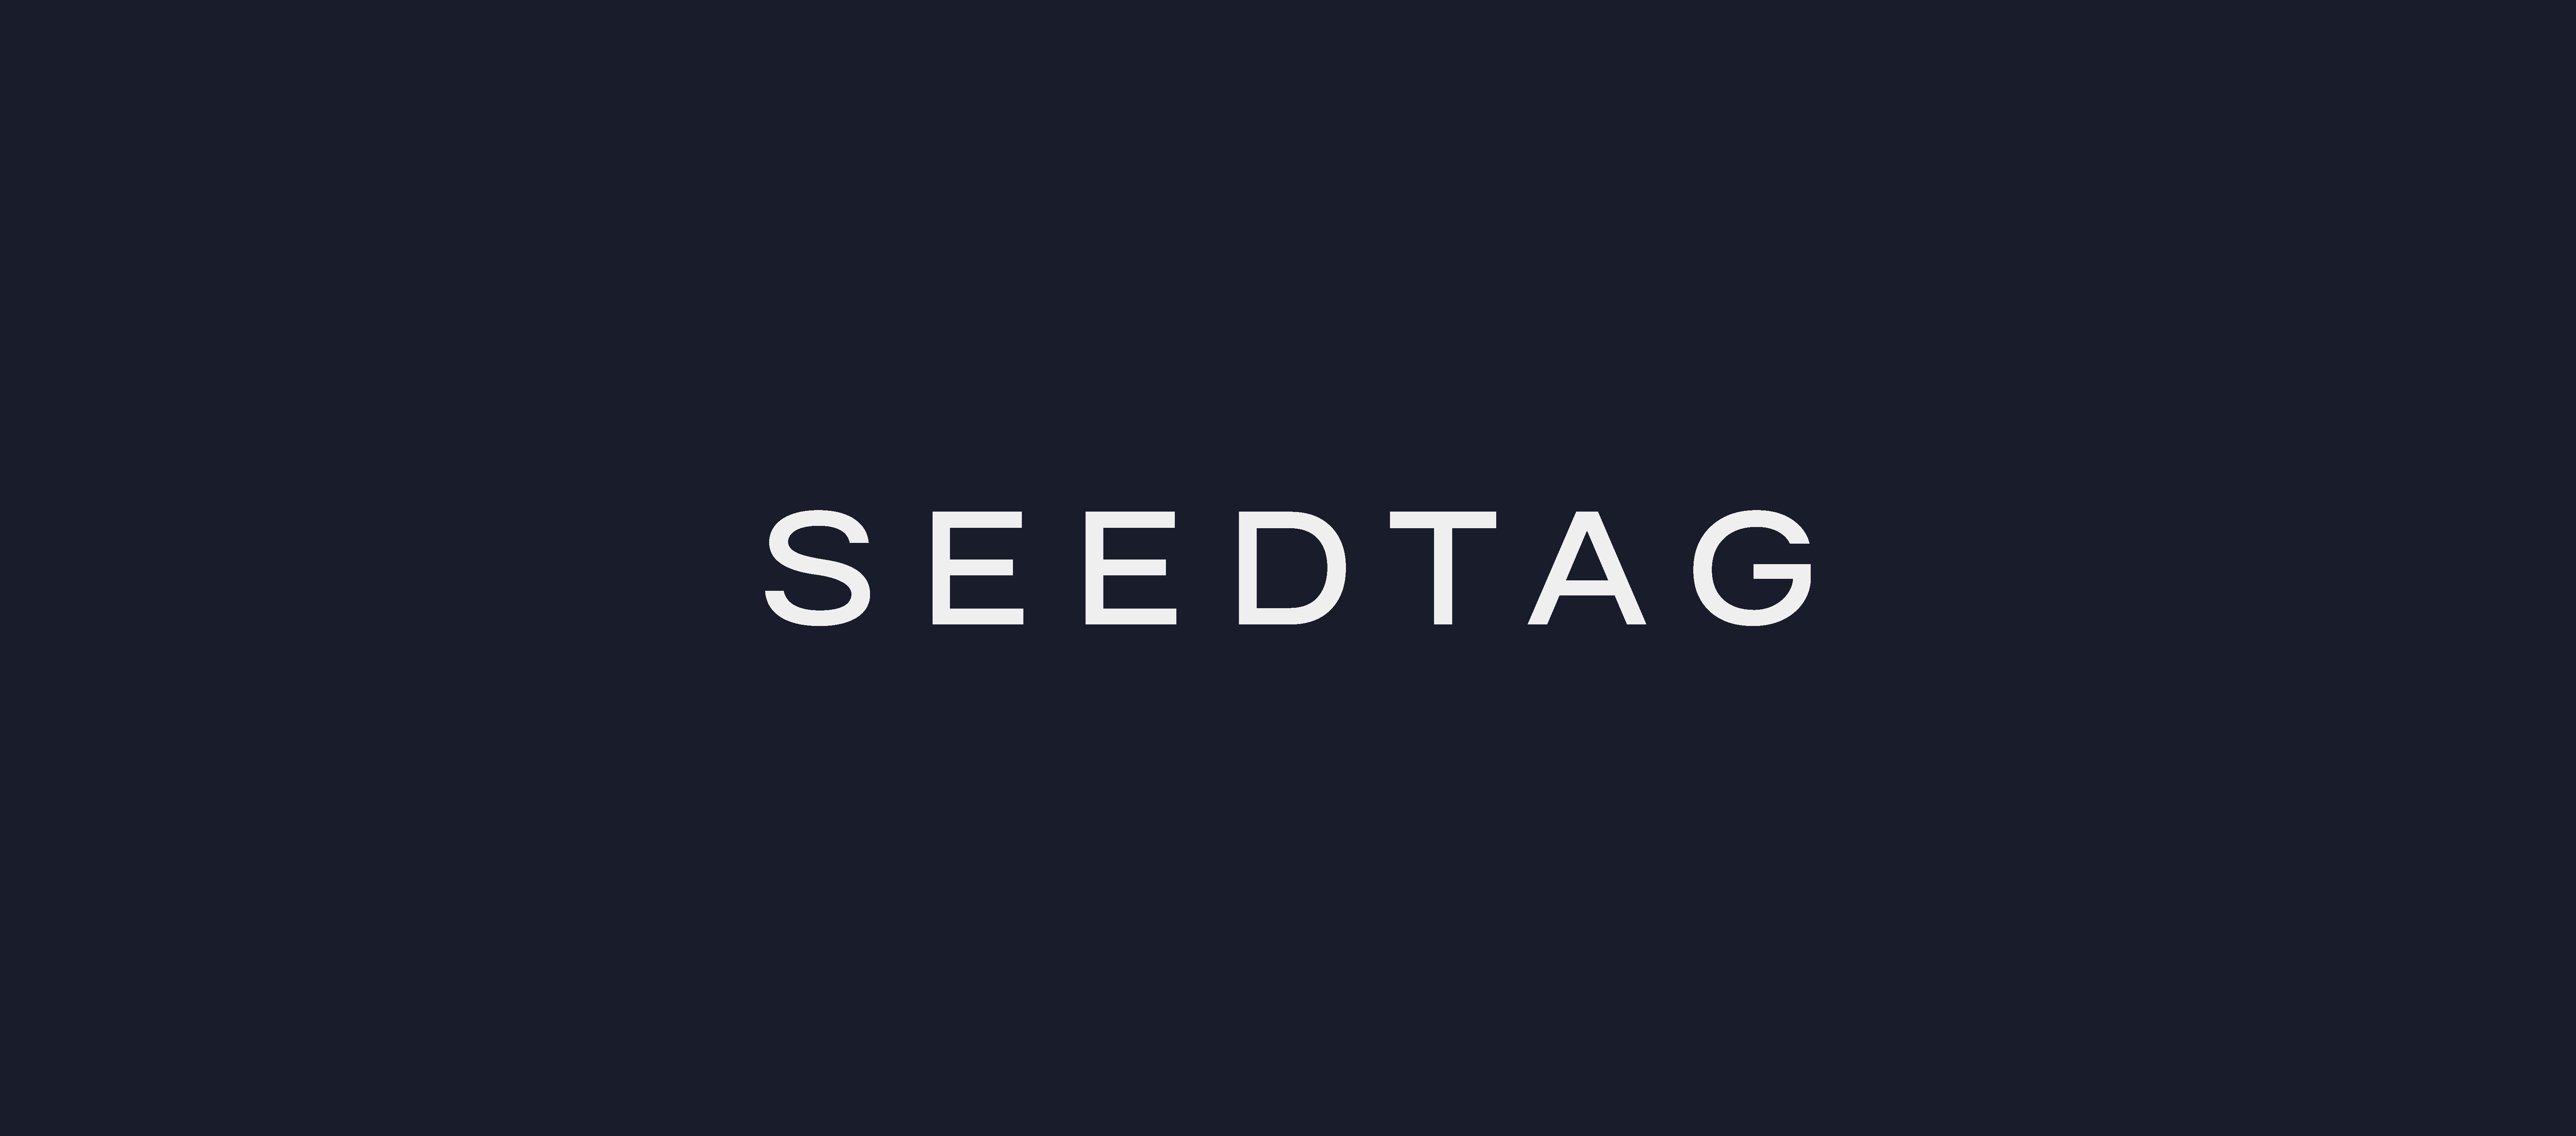 Seedtag_Logo